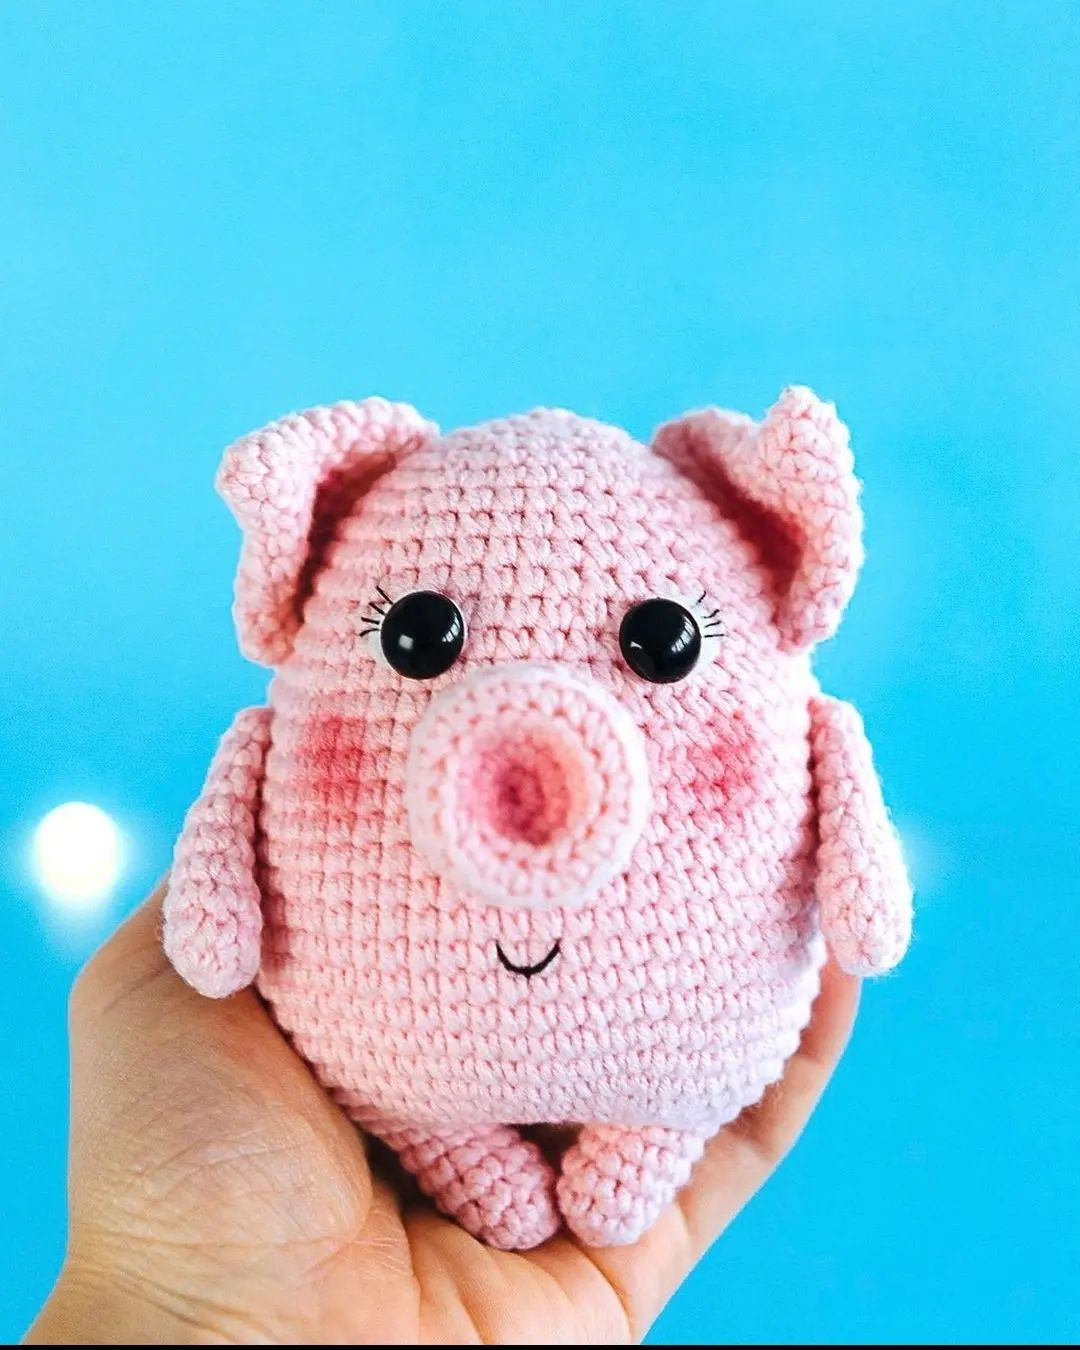 Pink pig crochet pattern wearing a blue hat.